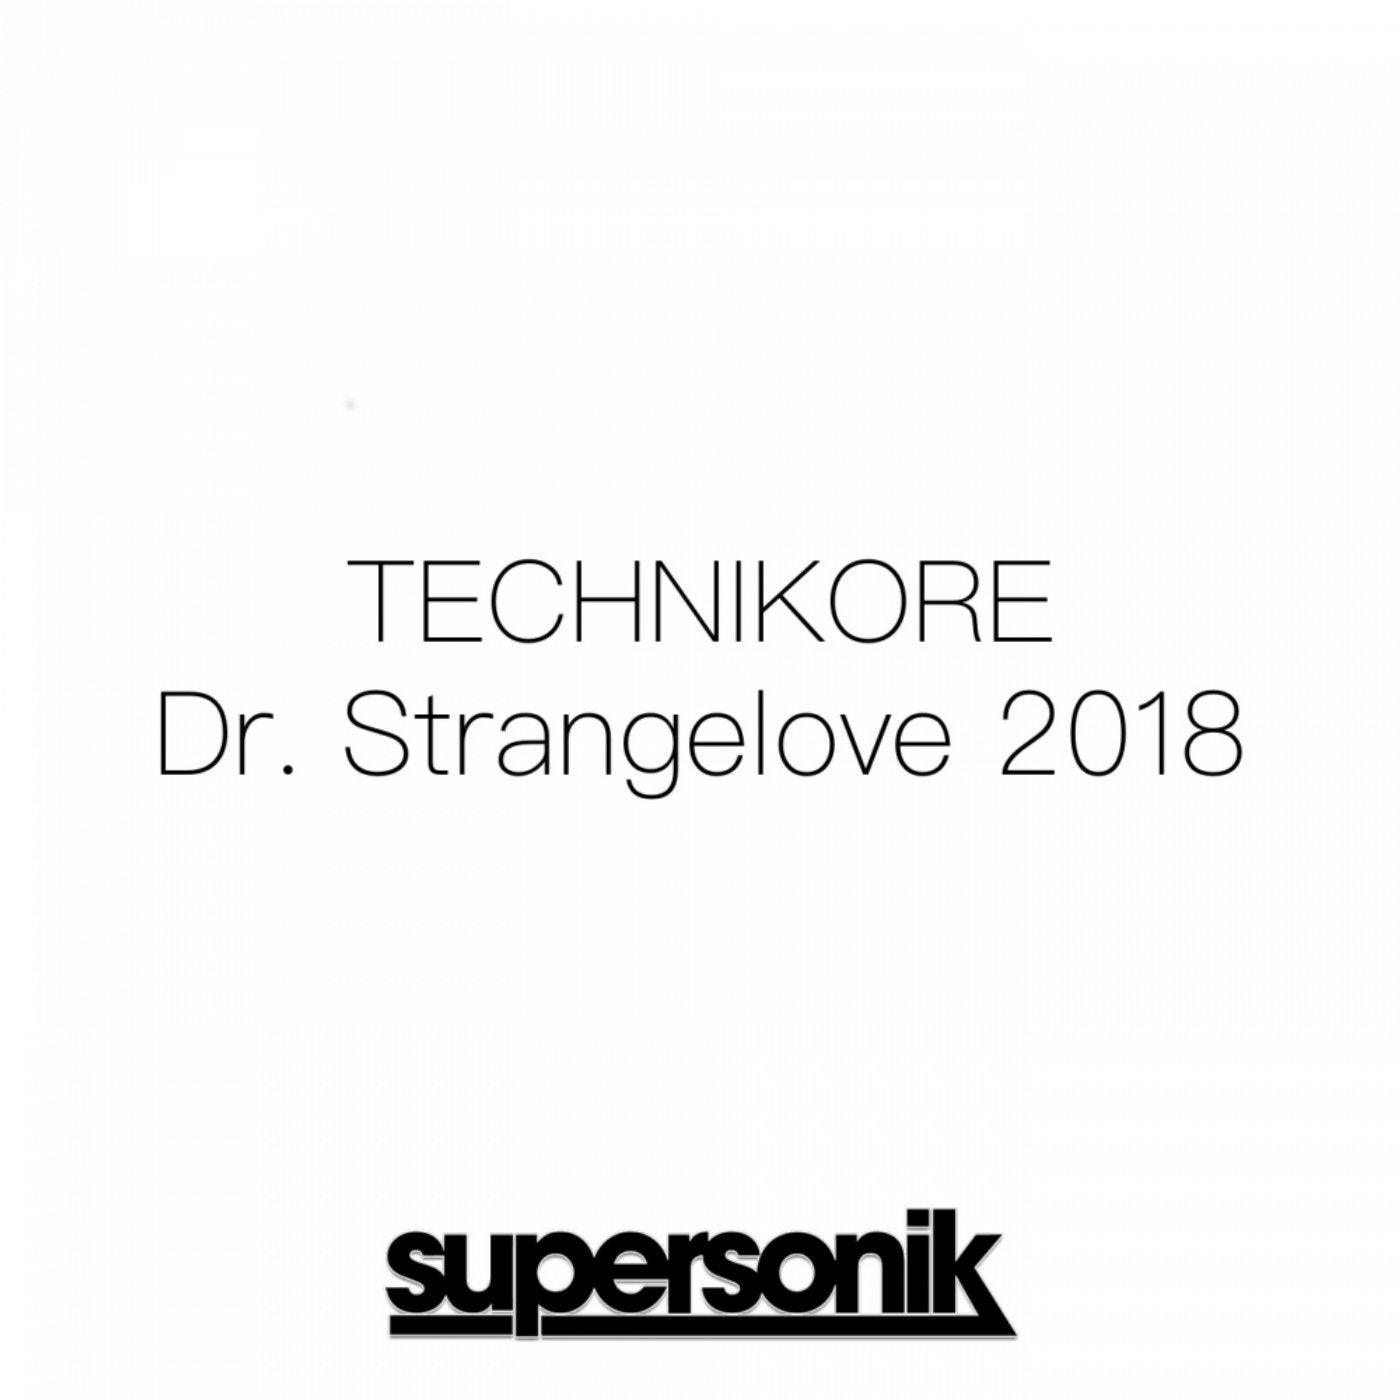 Dr. Strangelove 2018